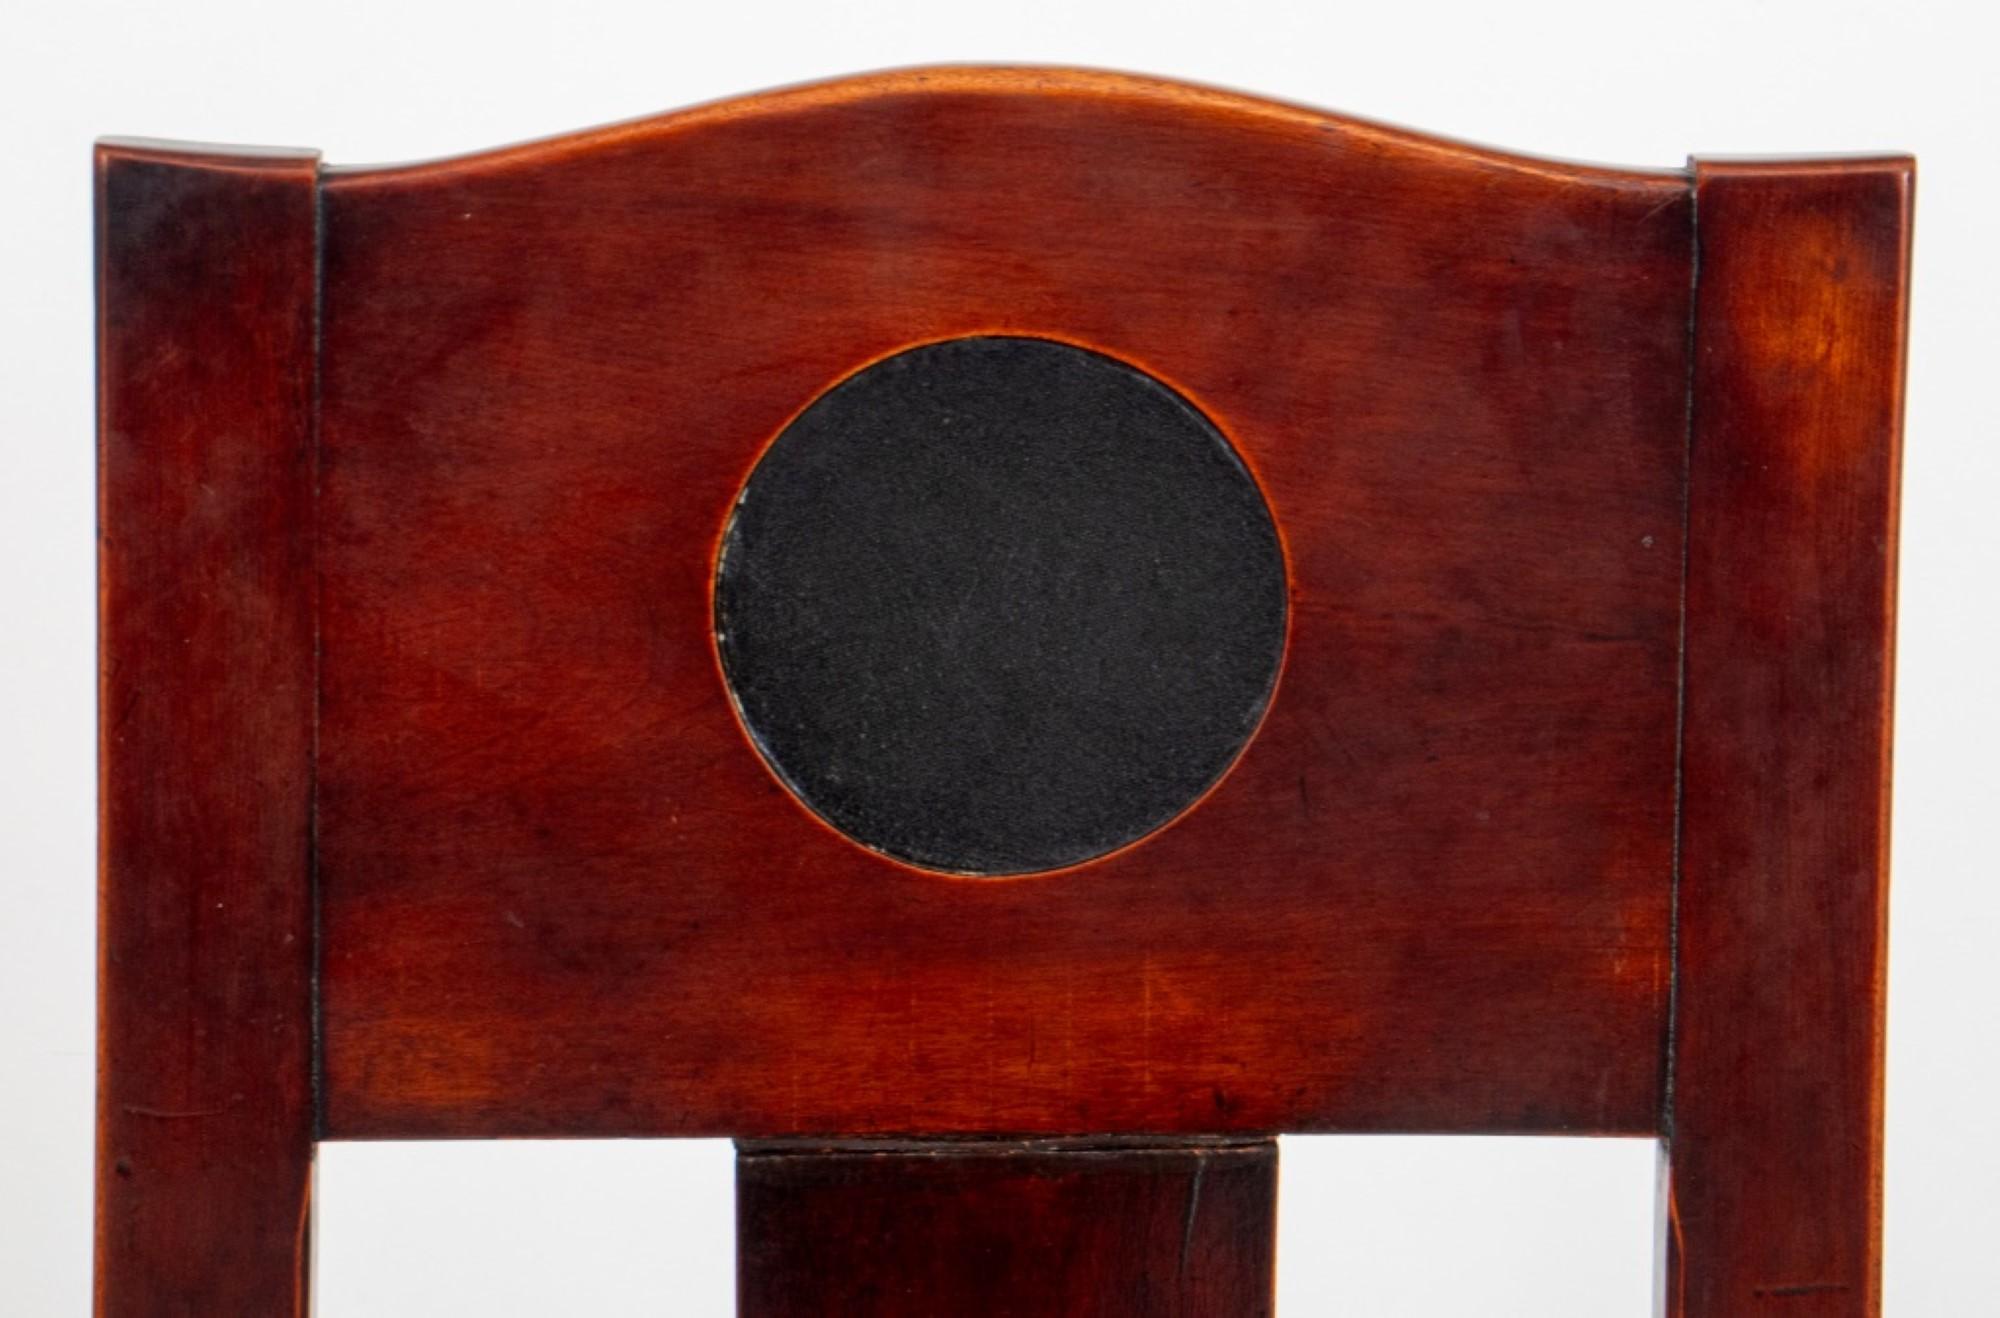 Hochlehniger Stuhl im Mackintosh-Stil, mit Ledersitz und Nagelkopfdetails.

53,5